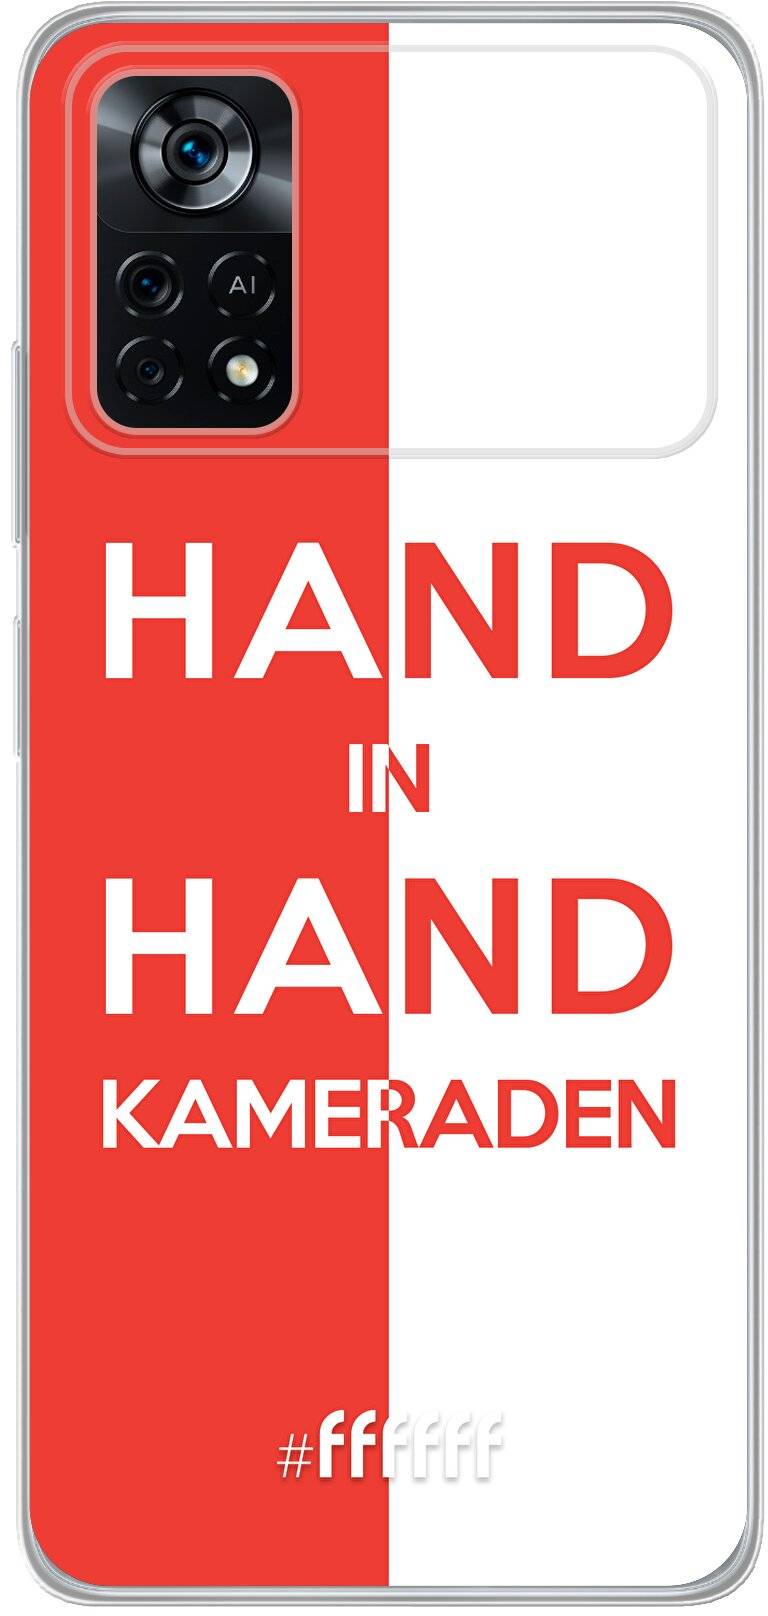 Feyenoord - Hand in hand, kameraden Poco X4 Pro 5G